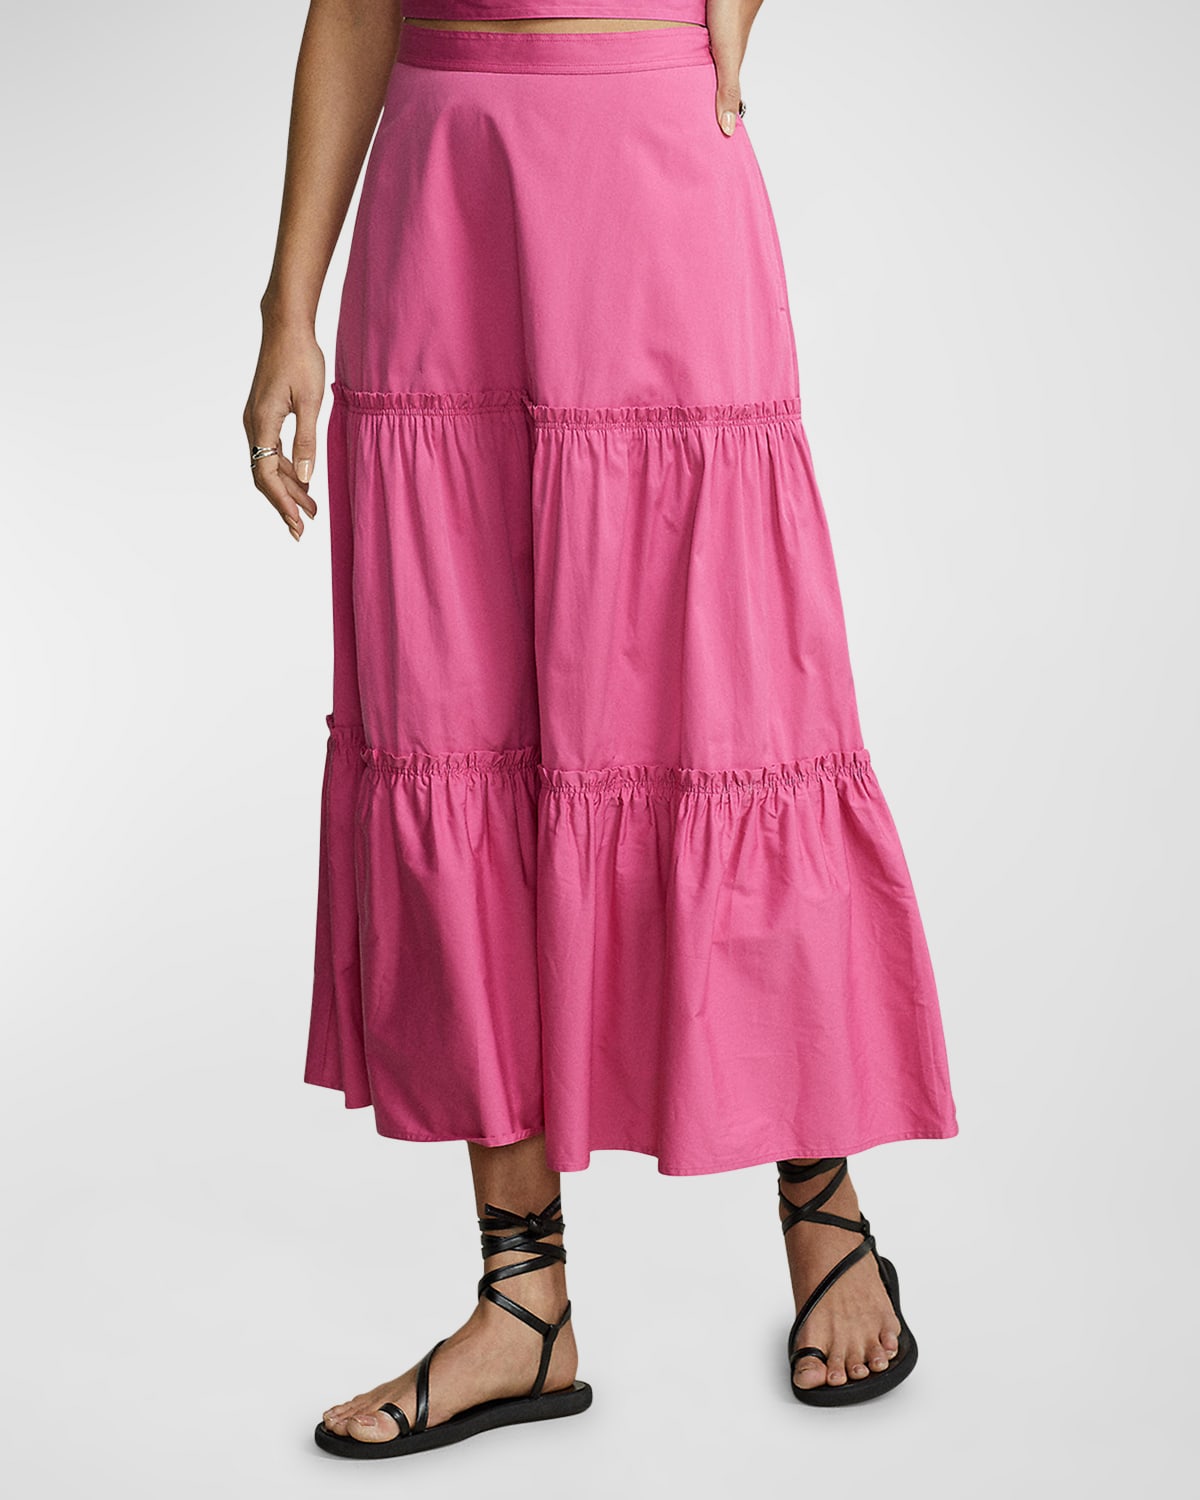 Polo Ralph Lauren Floral-Stripe Tiered Cotton Skirt | Neiman Marcus